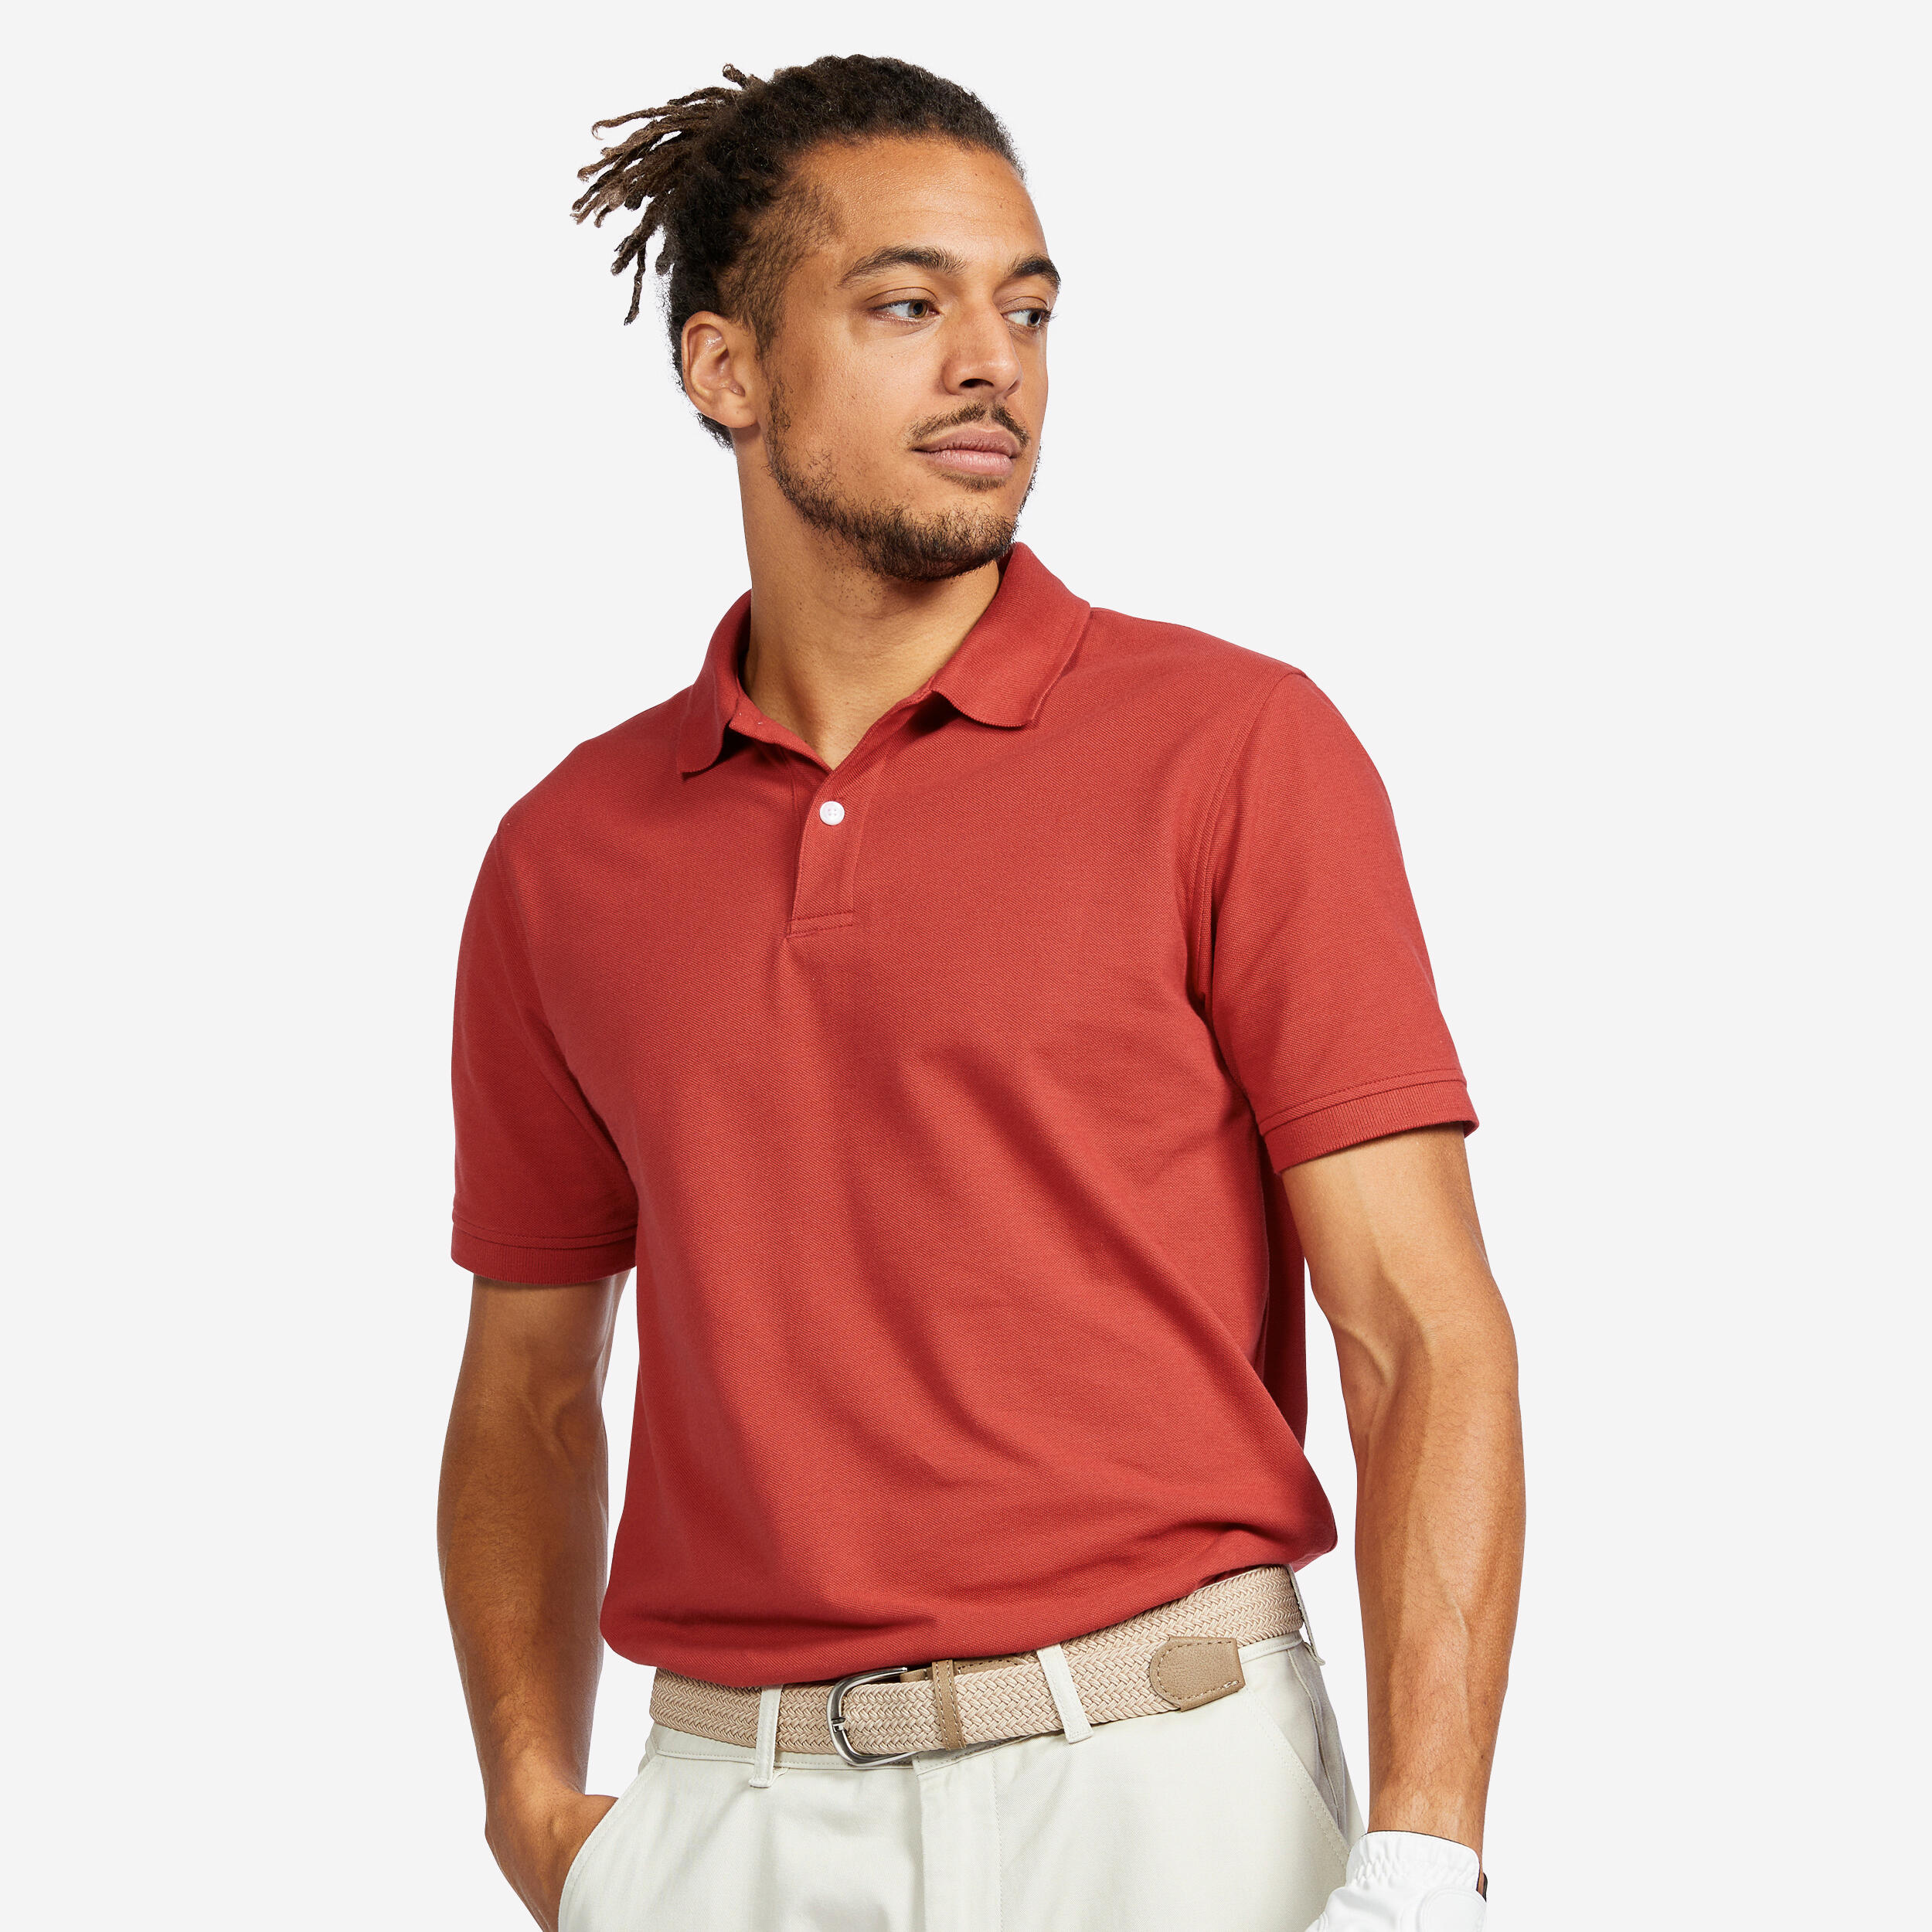 INESIS Men's short-sleeved golf polo shirt - MW500 dark red